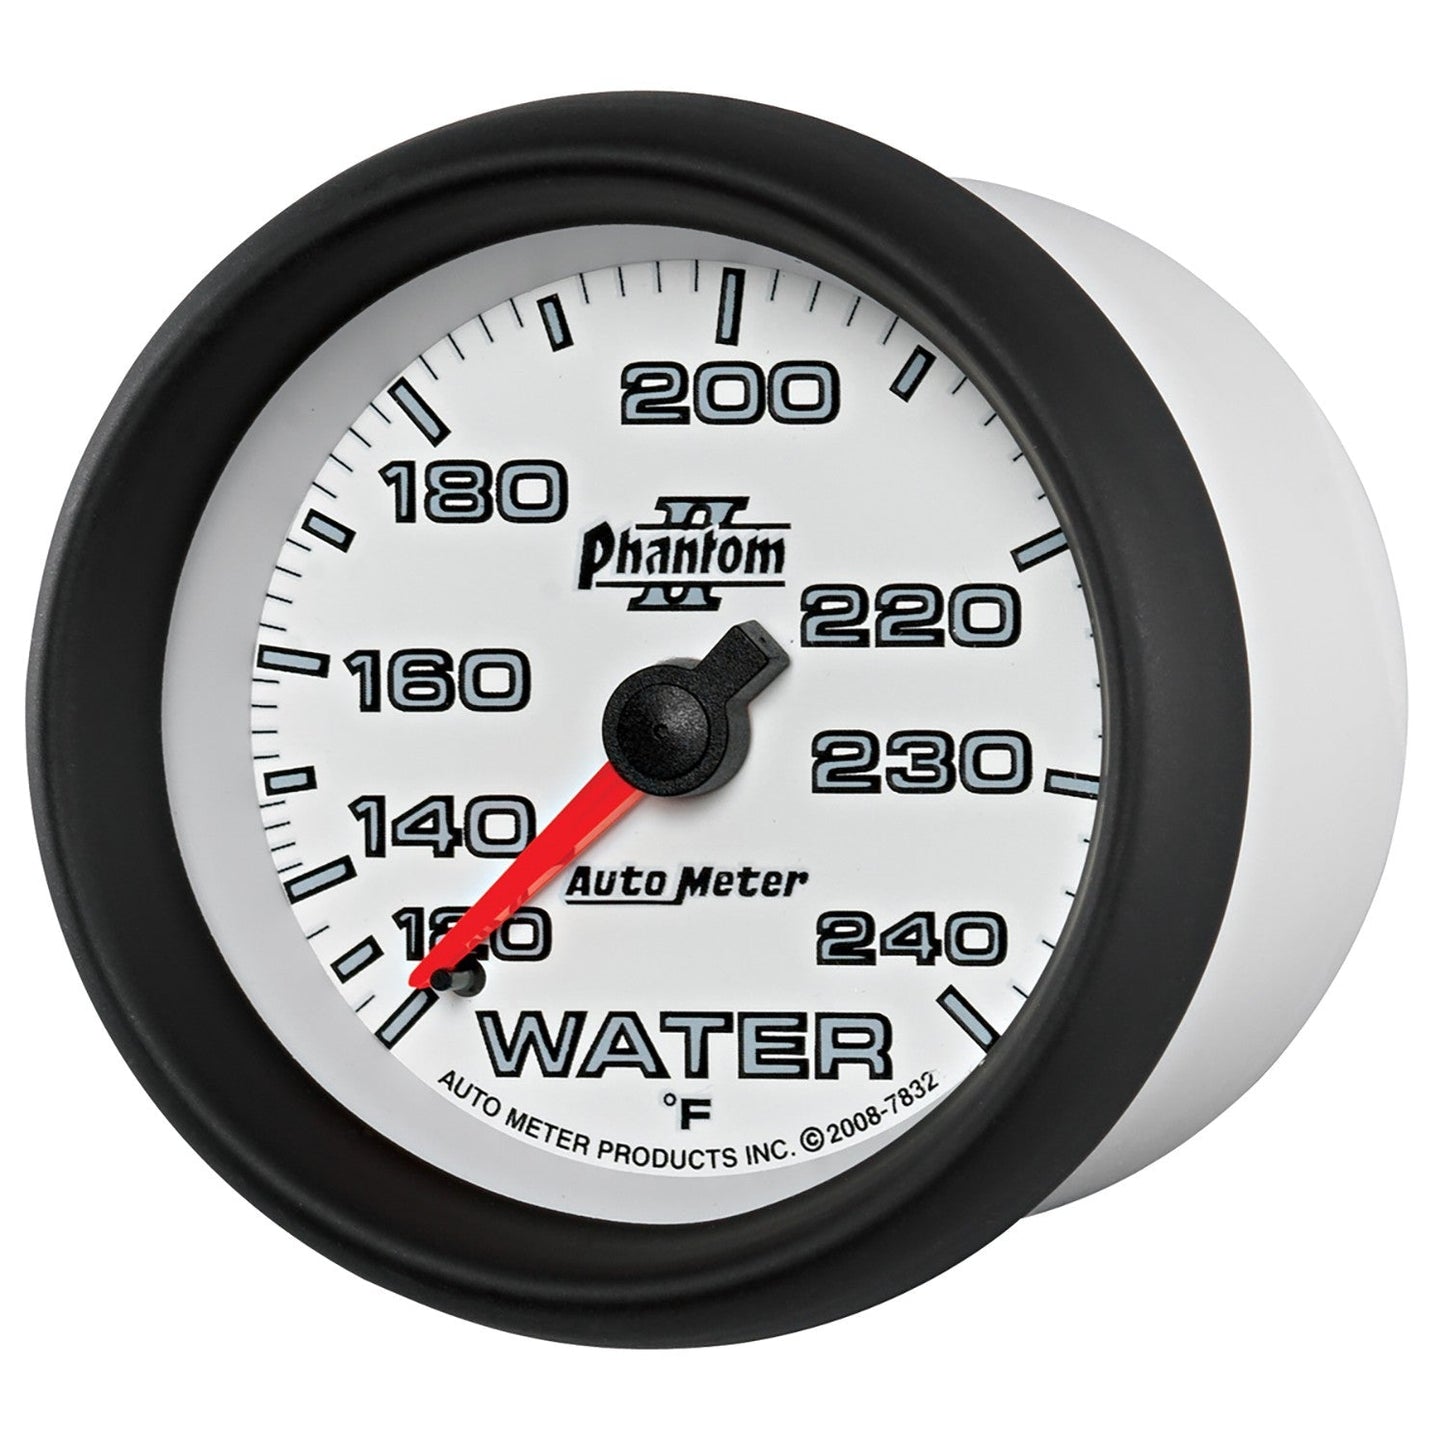 AutoMeter - 2-5/8" WATER TEMPERATURE, 120-240 °F, 6 FT., MECHANICAL, PHANTOM II (7832)